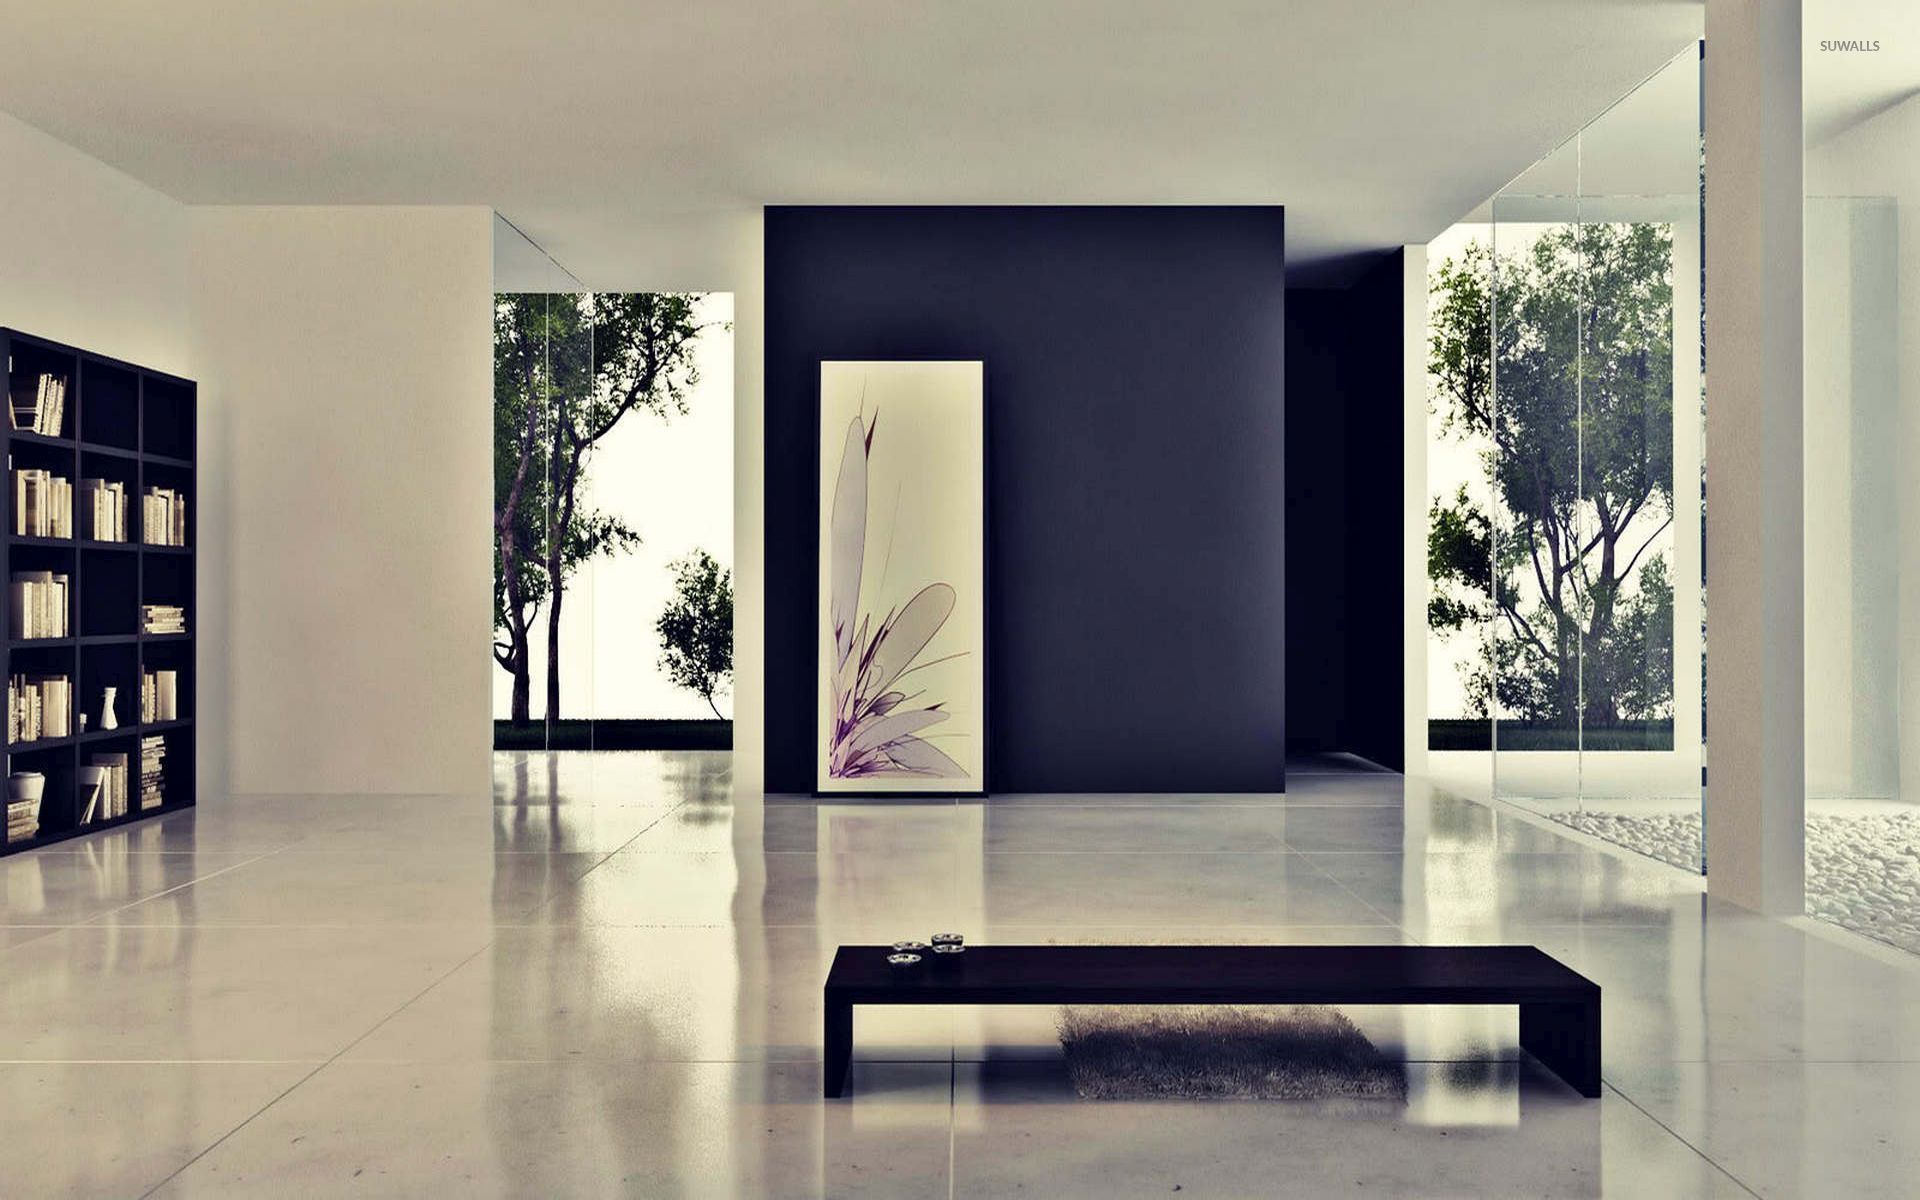 Minimal Living Room Design: Simple Yet Stylish